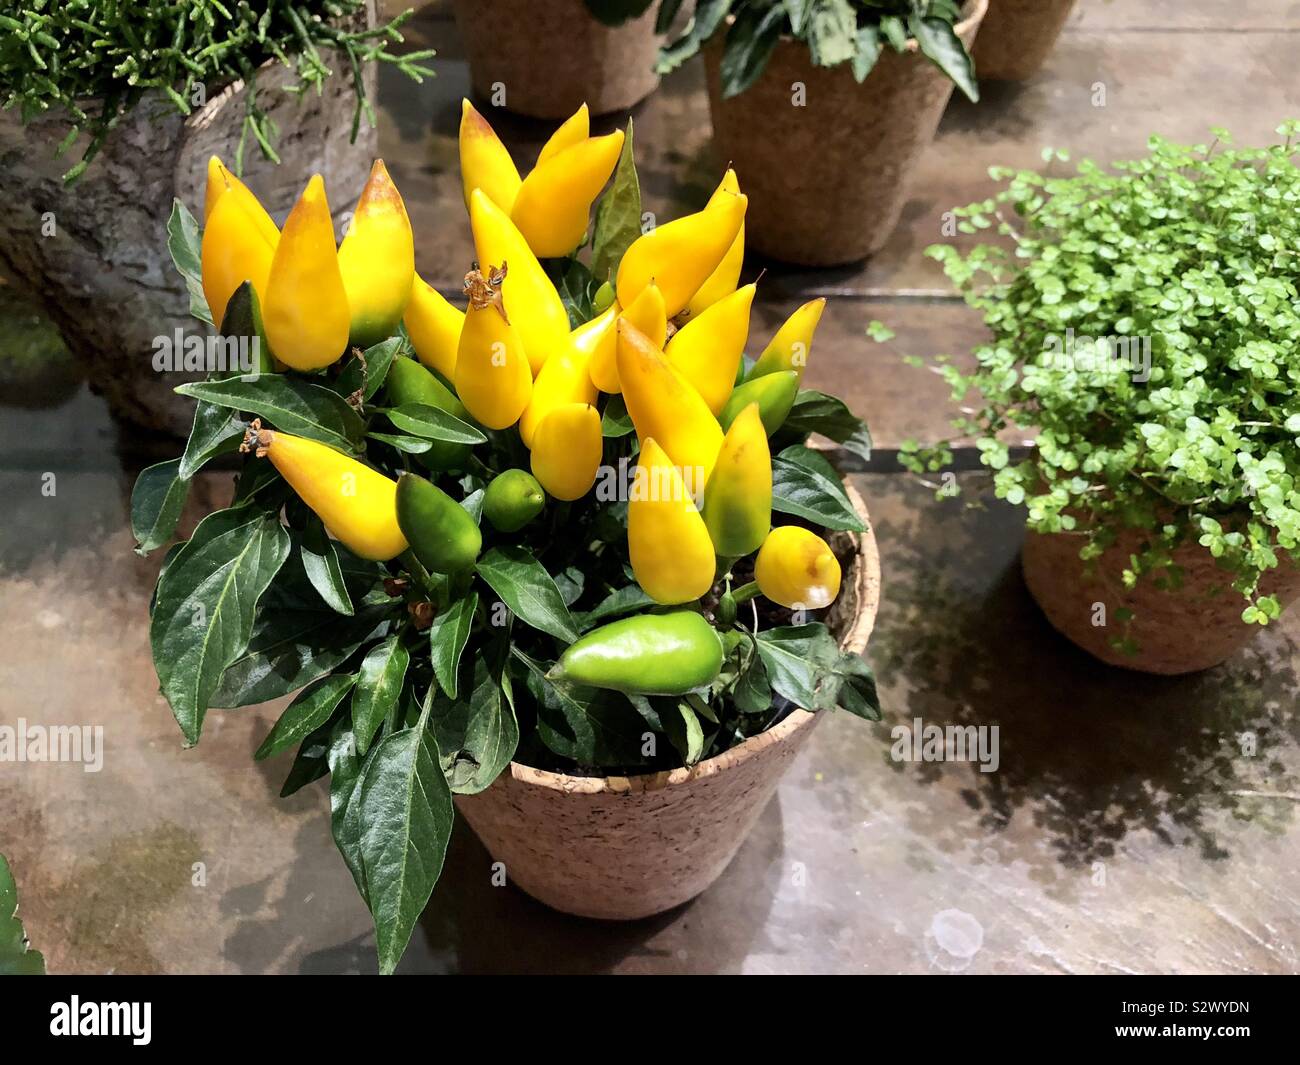 Yellow chili peppers Stock Photo